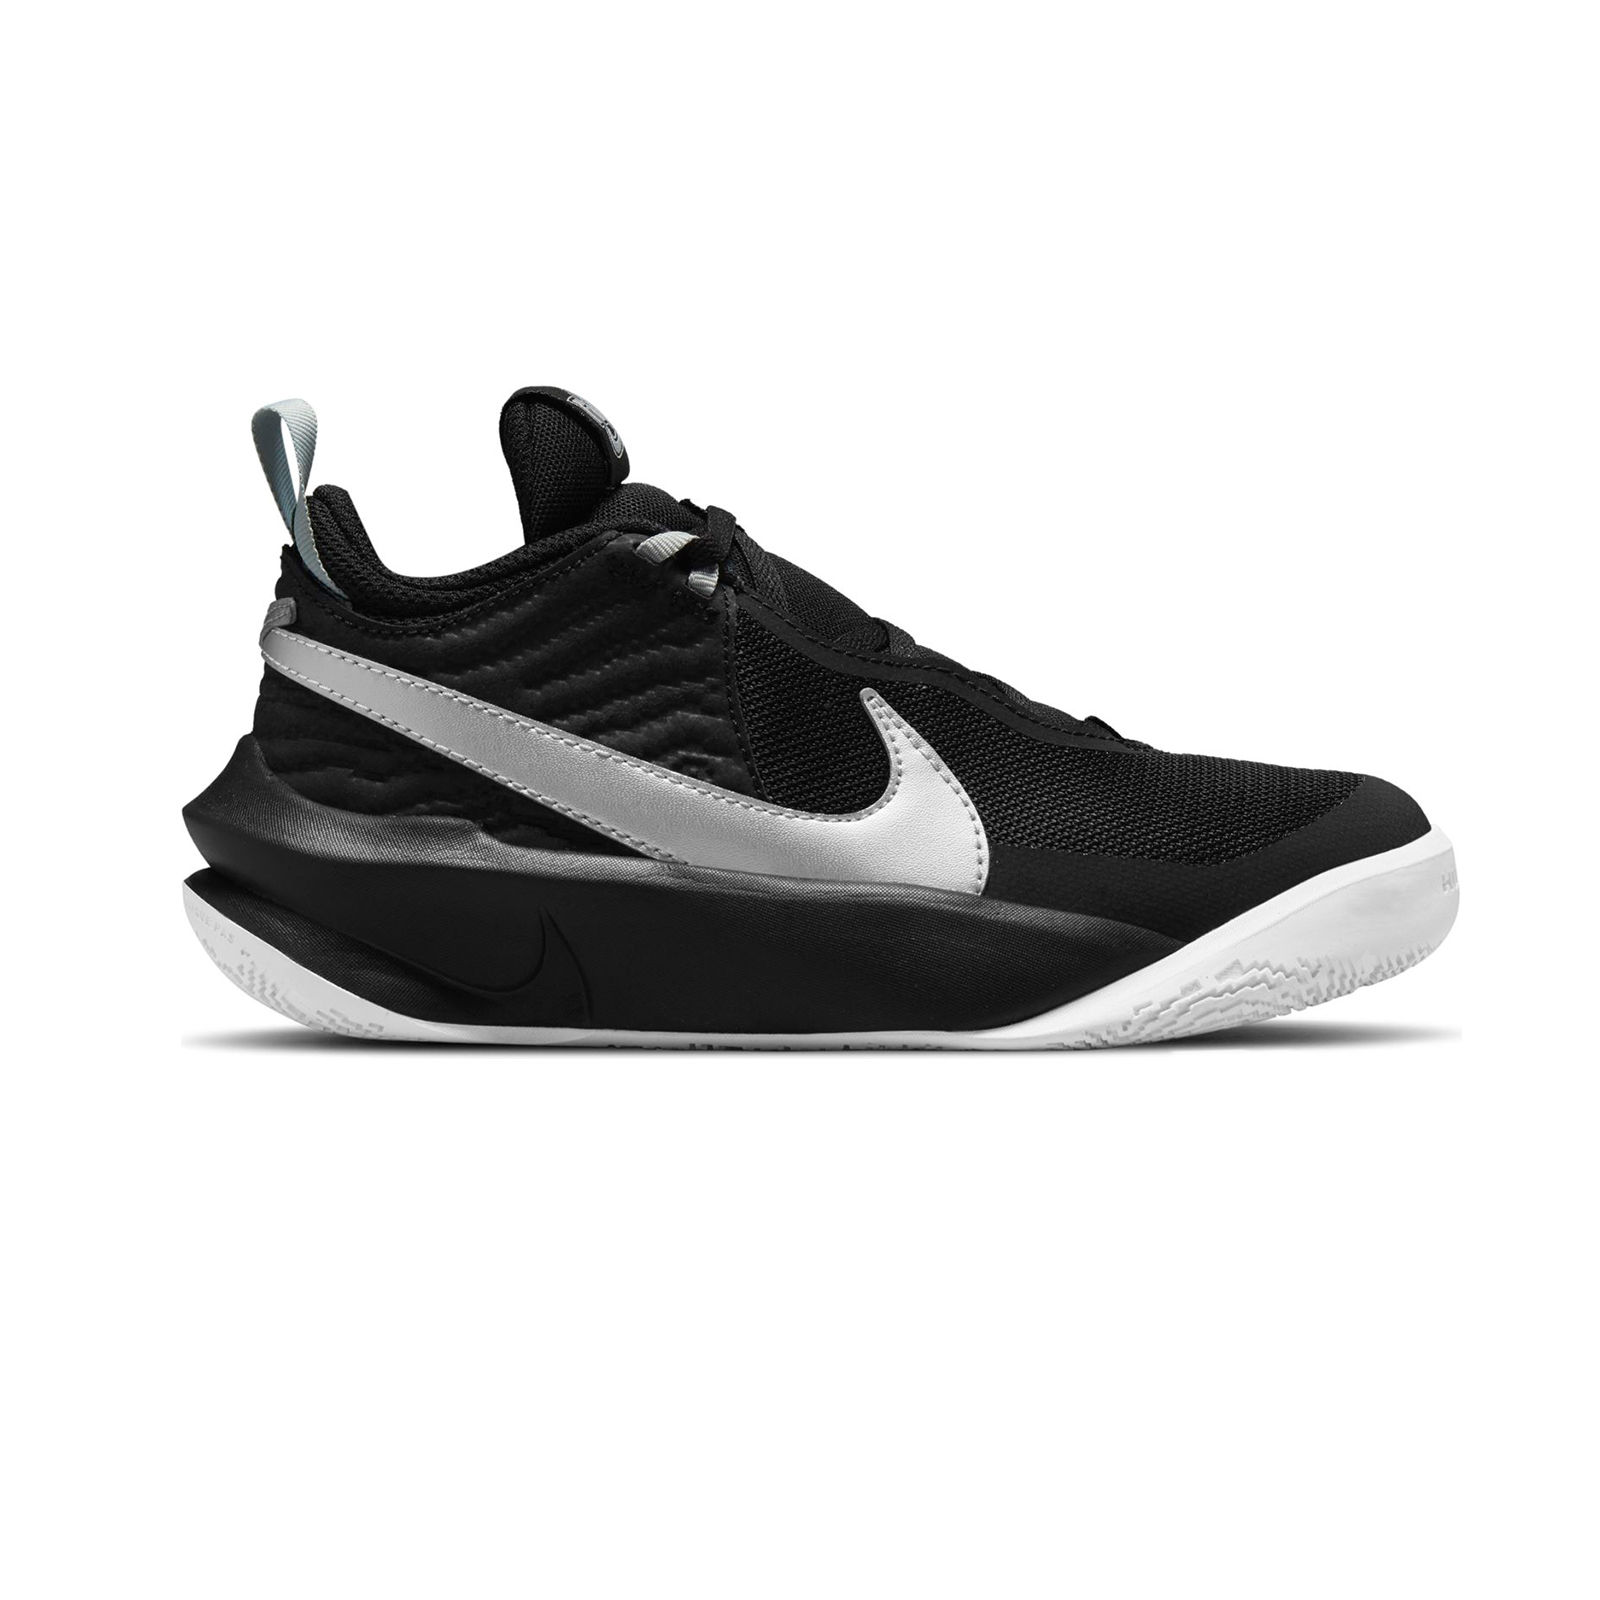 Nike - TEAM HUSTLE D 10 (PS) - BLACK/METALLIC SILVER-VOLT-WHITE Παιδικά > Παπούτσια > Αθλητικά > Μποτάκι High Cut